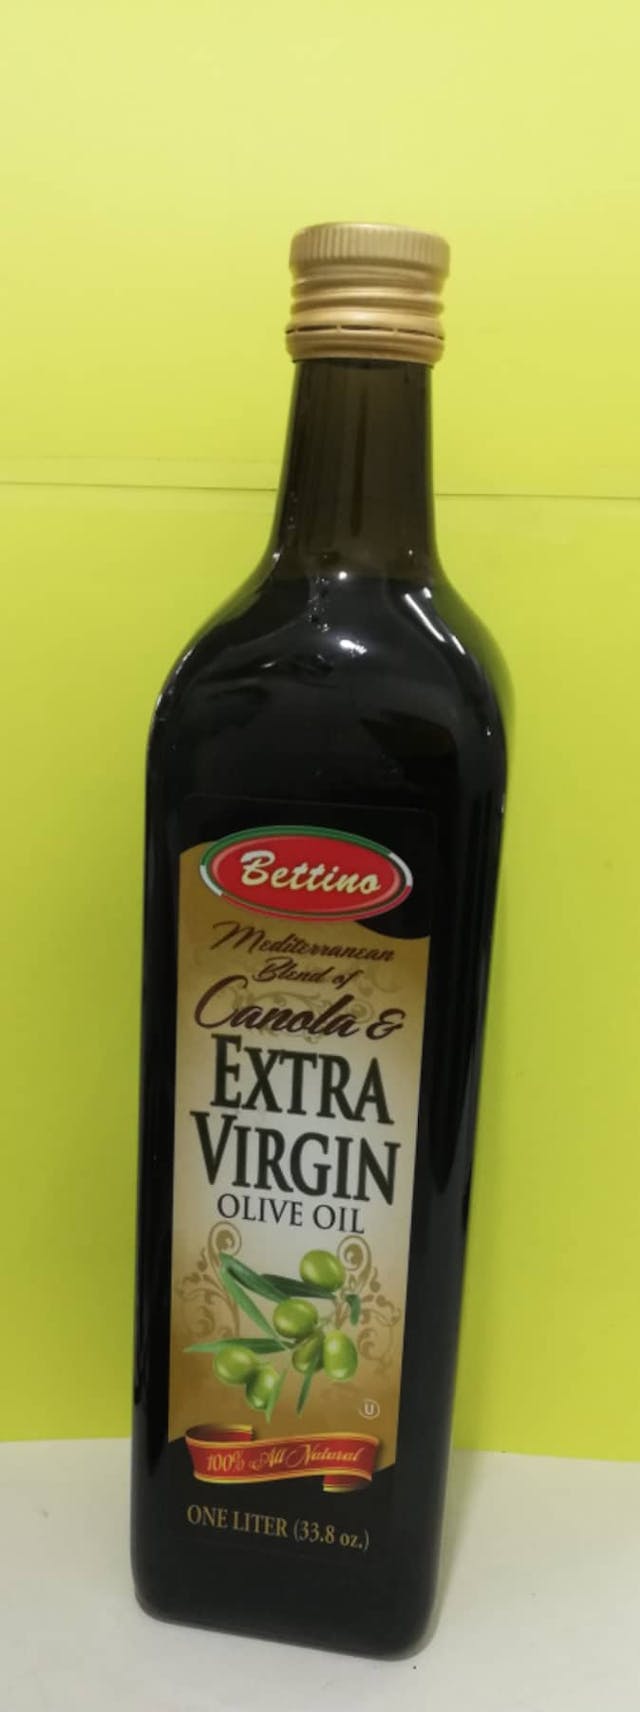 Bettino Extra Virgin Olive Oil Blend 33.8 fl oz 1L Glass